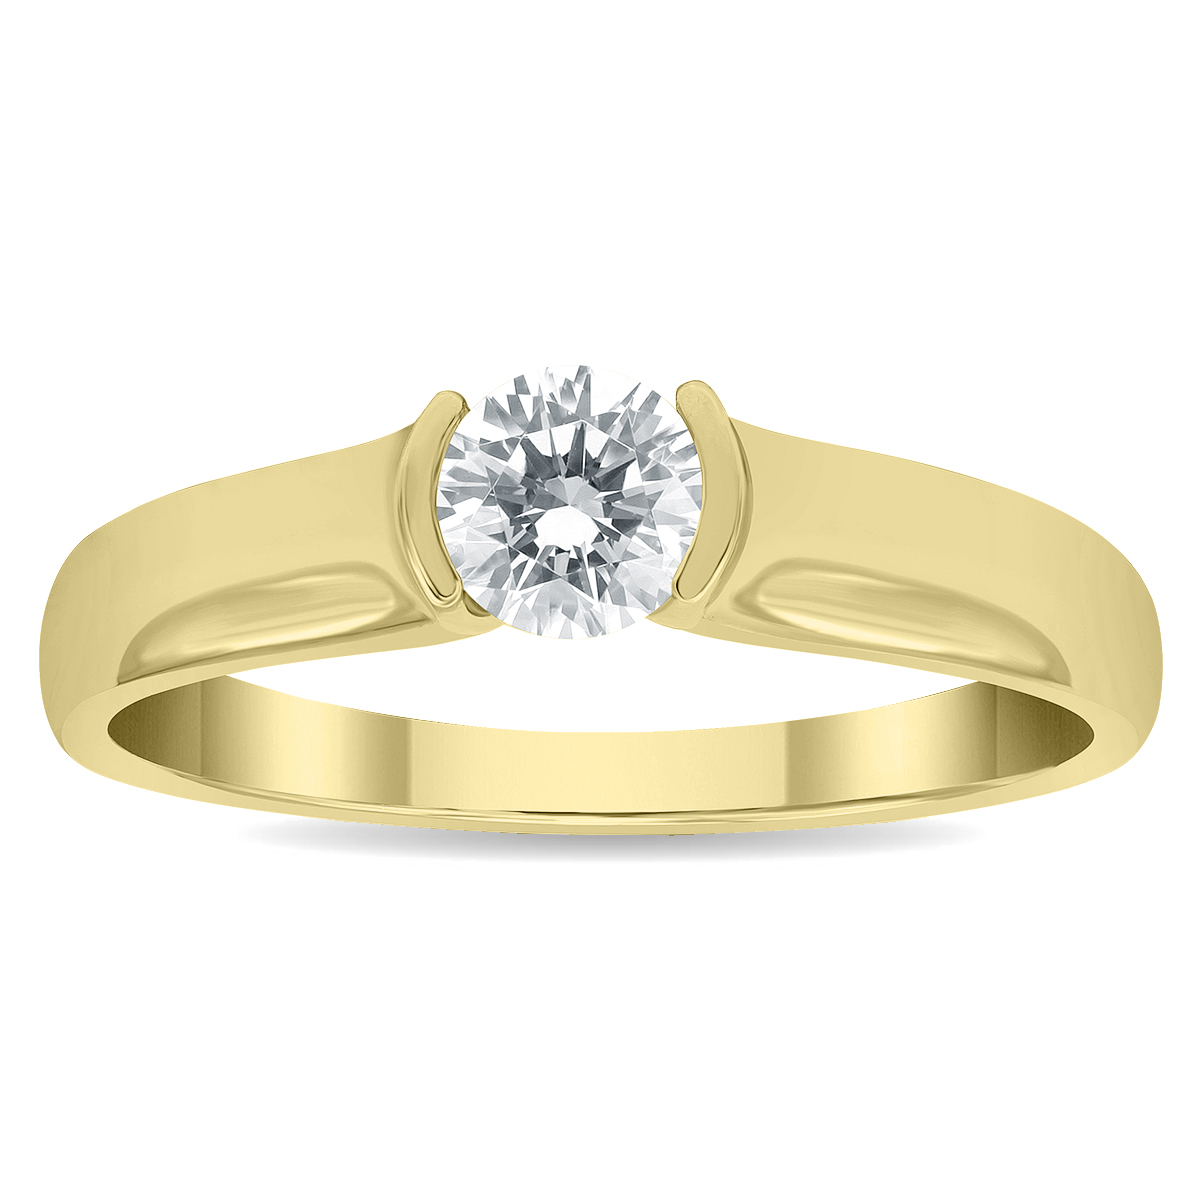 1/2 Carat Half Bezel Diamond Solitaire Ring in 10K Yellow Gold